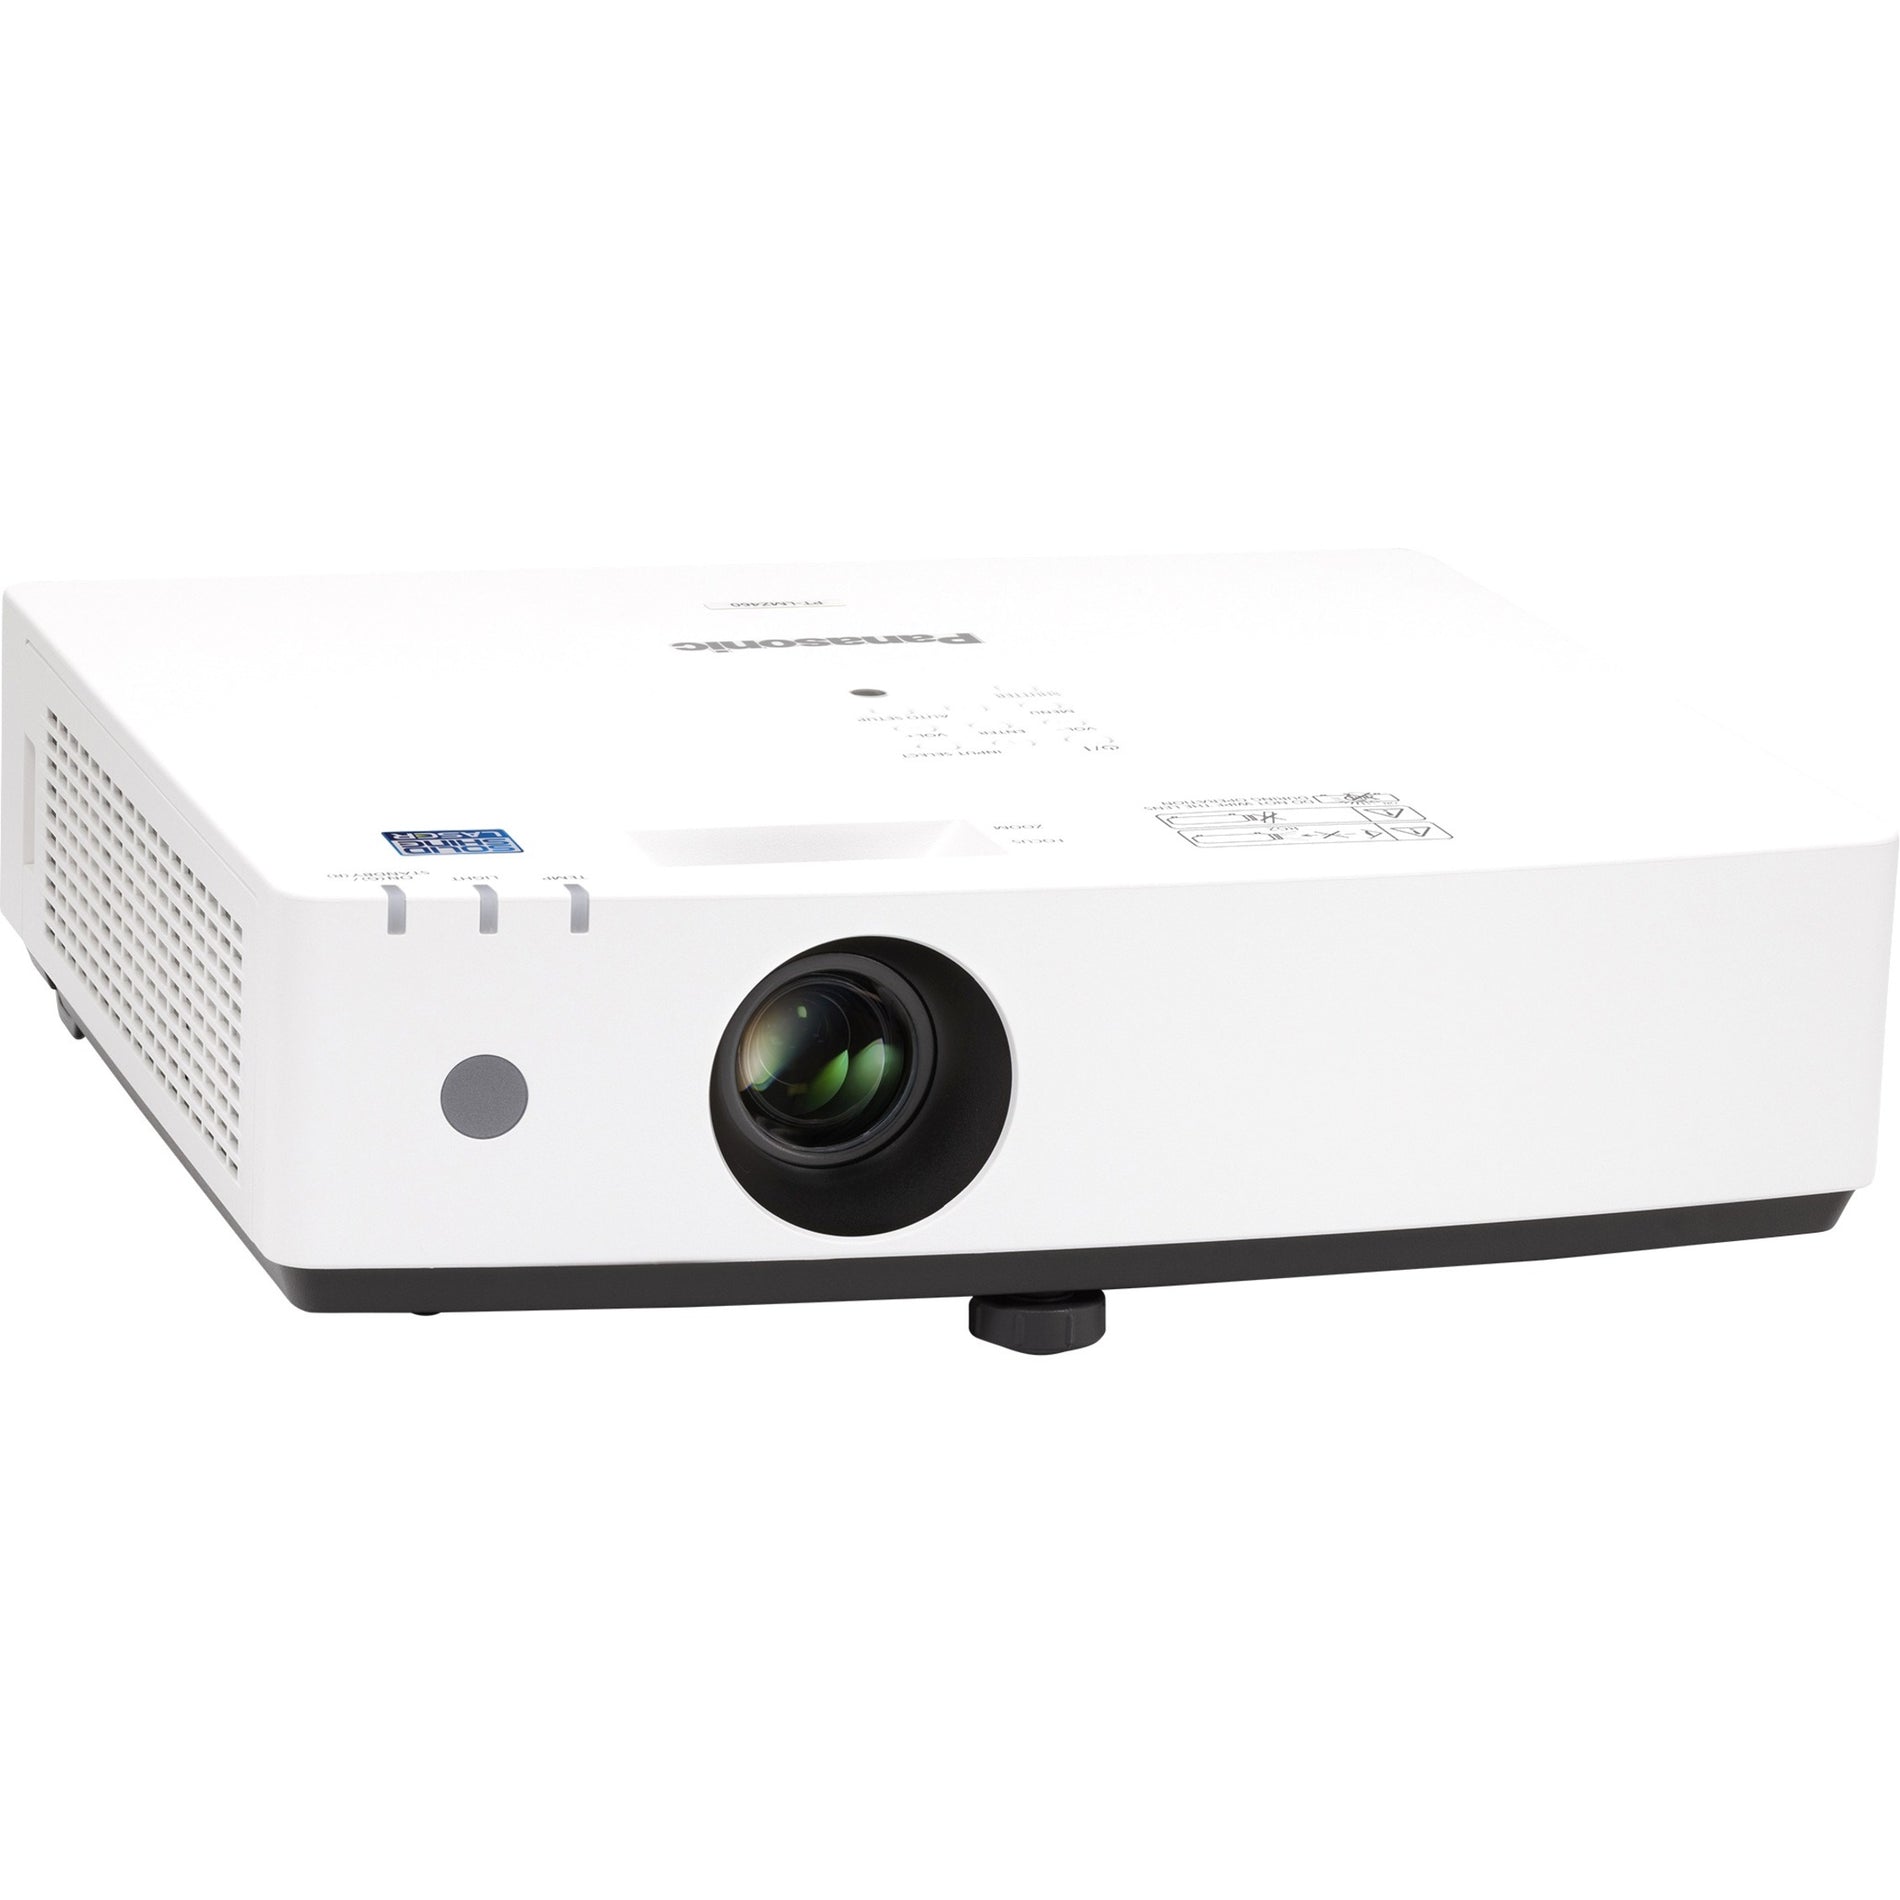 Panasonic PT-LMW420U LCD Projector, Portable Proj Laser WXGA 1280 x 800, 4200 Lumens, 1.2x Optical Zoom, HDMI, USB, RJ-45